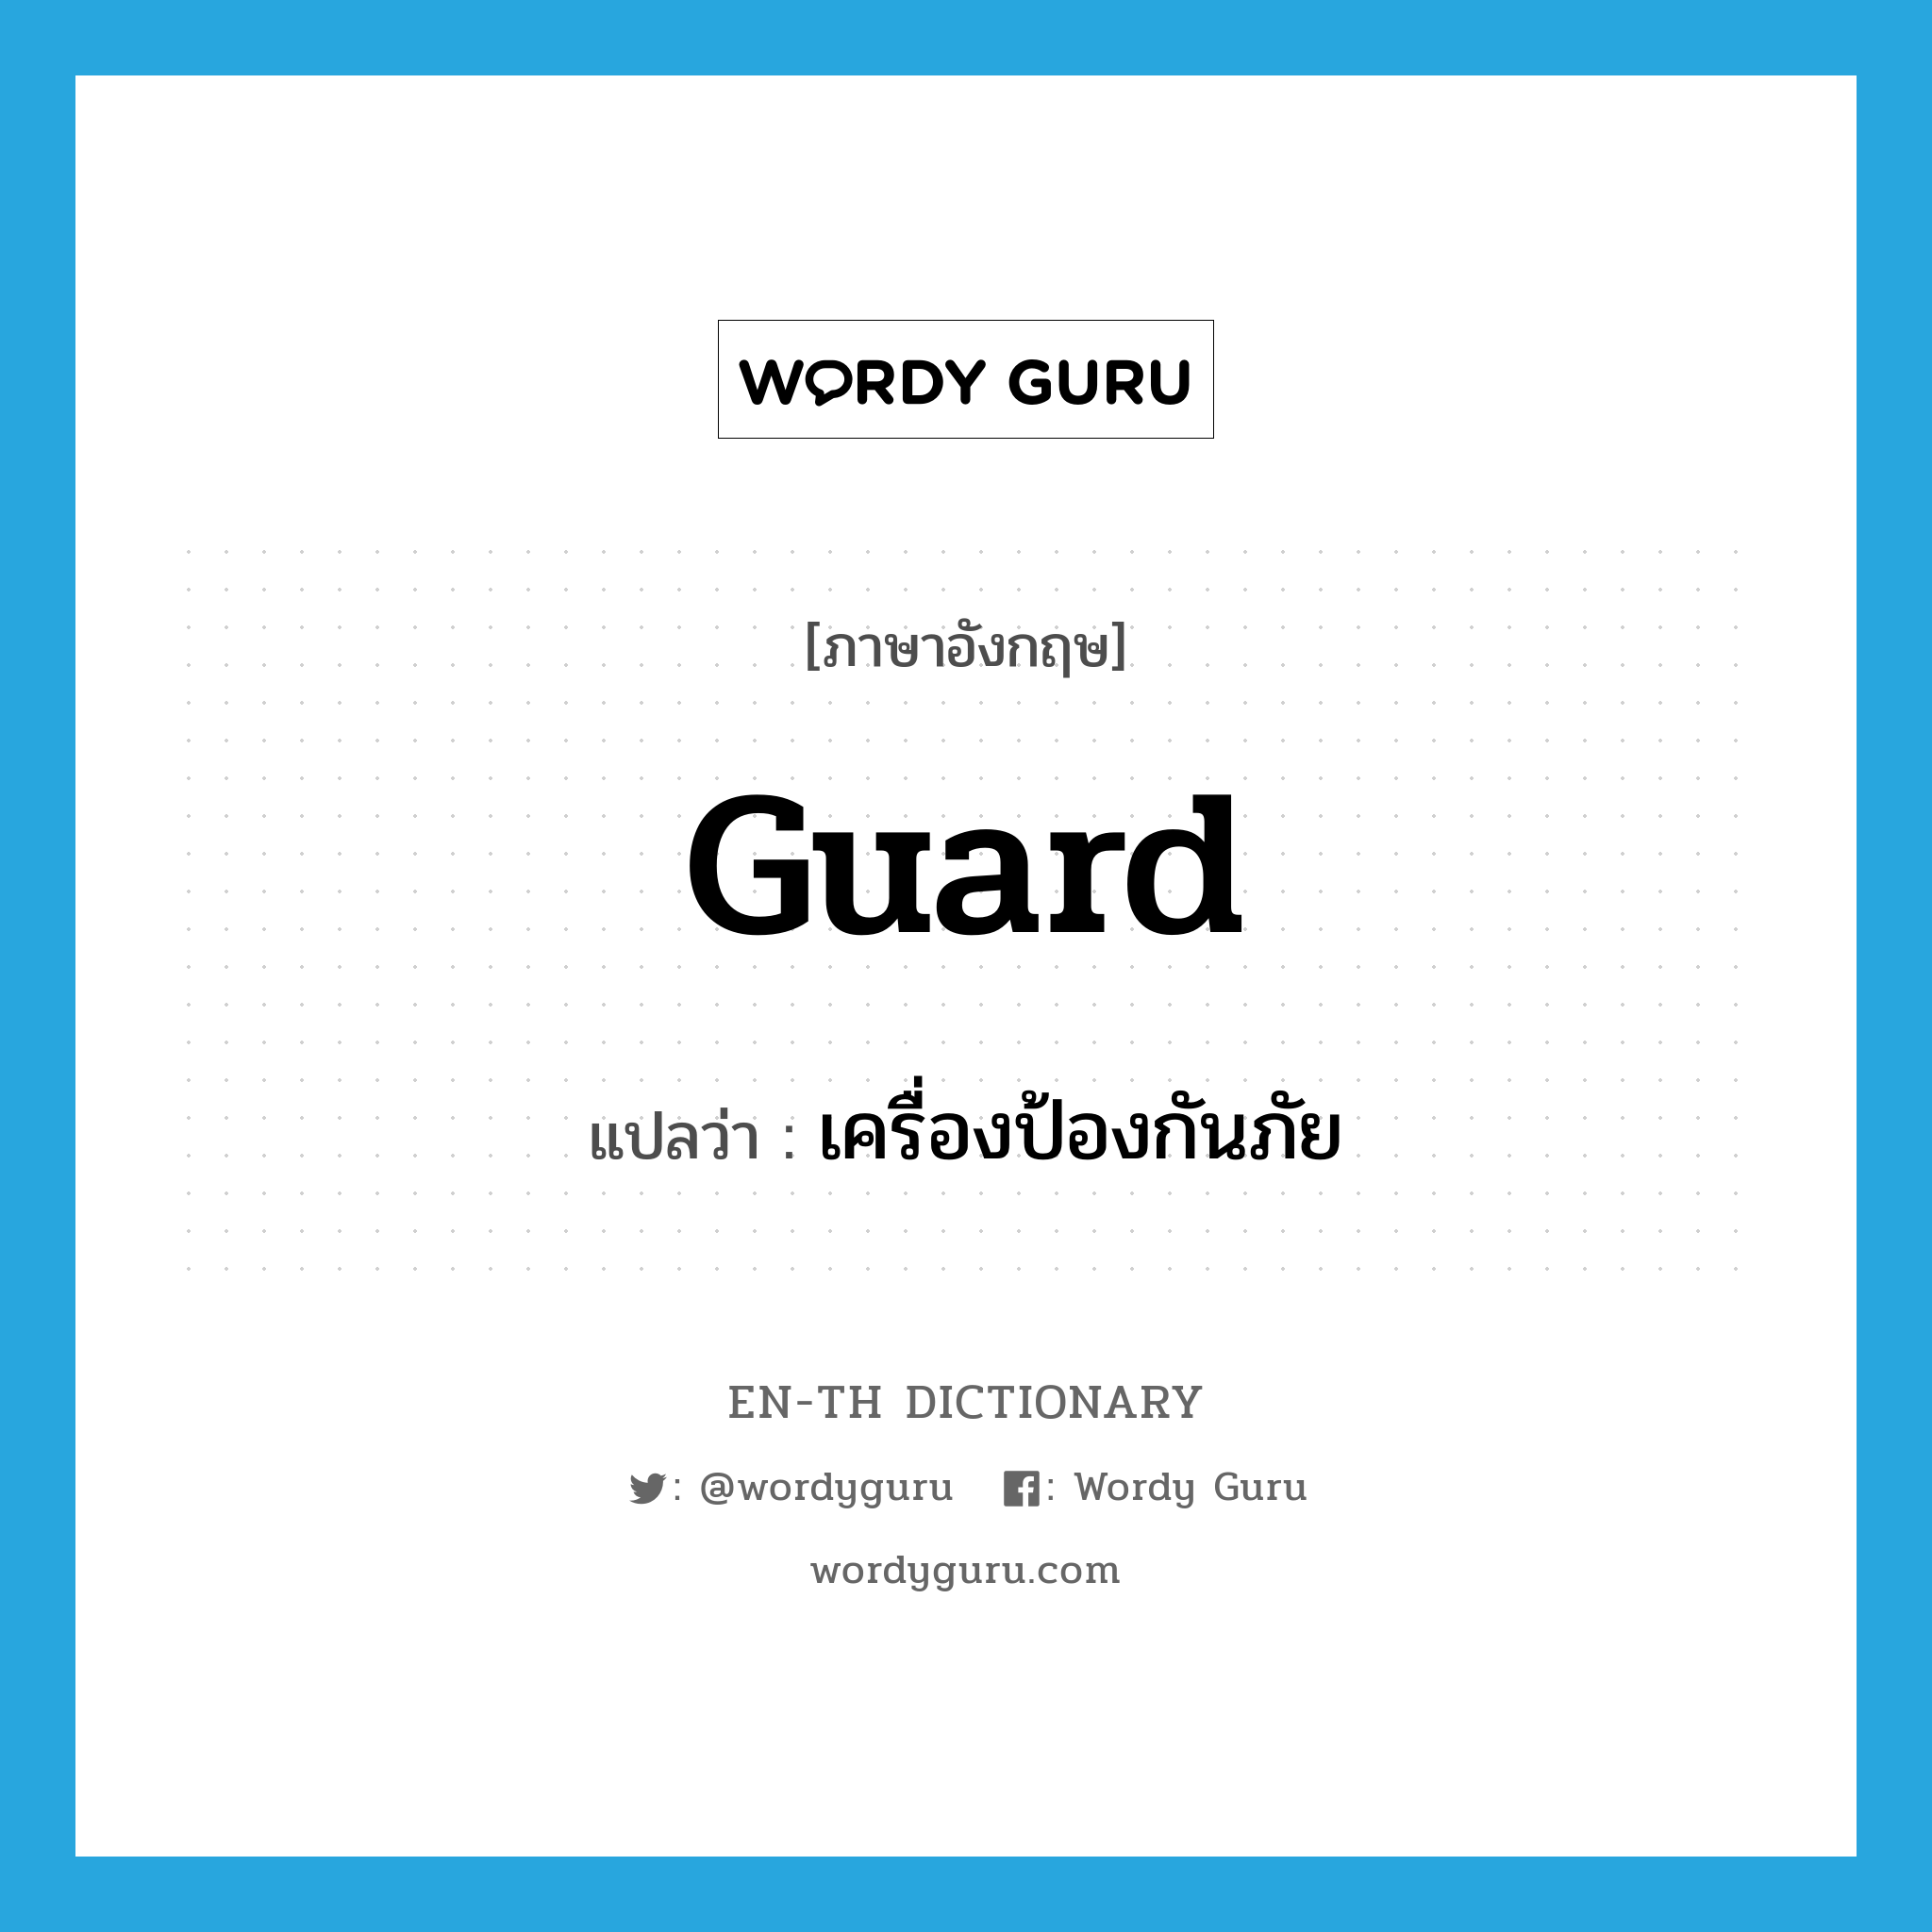 guard